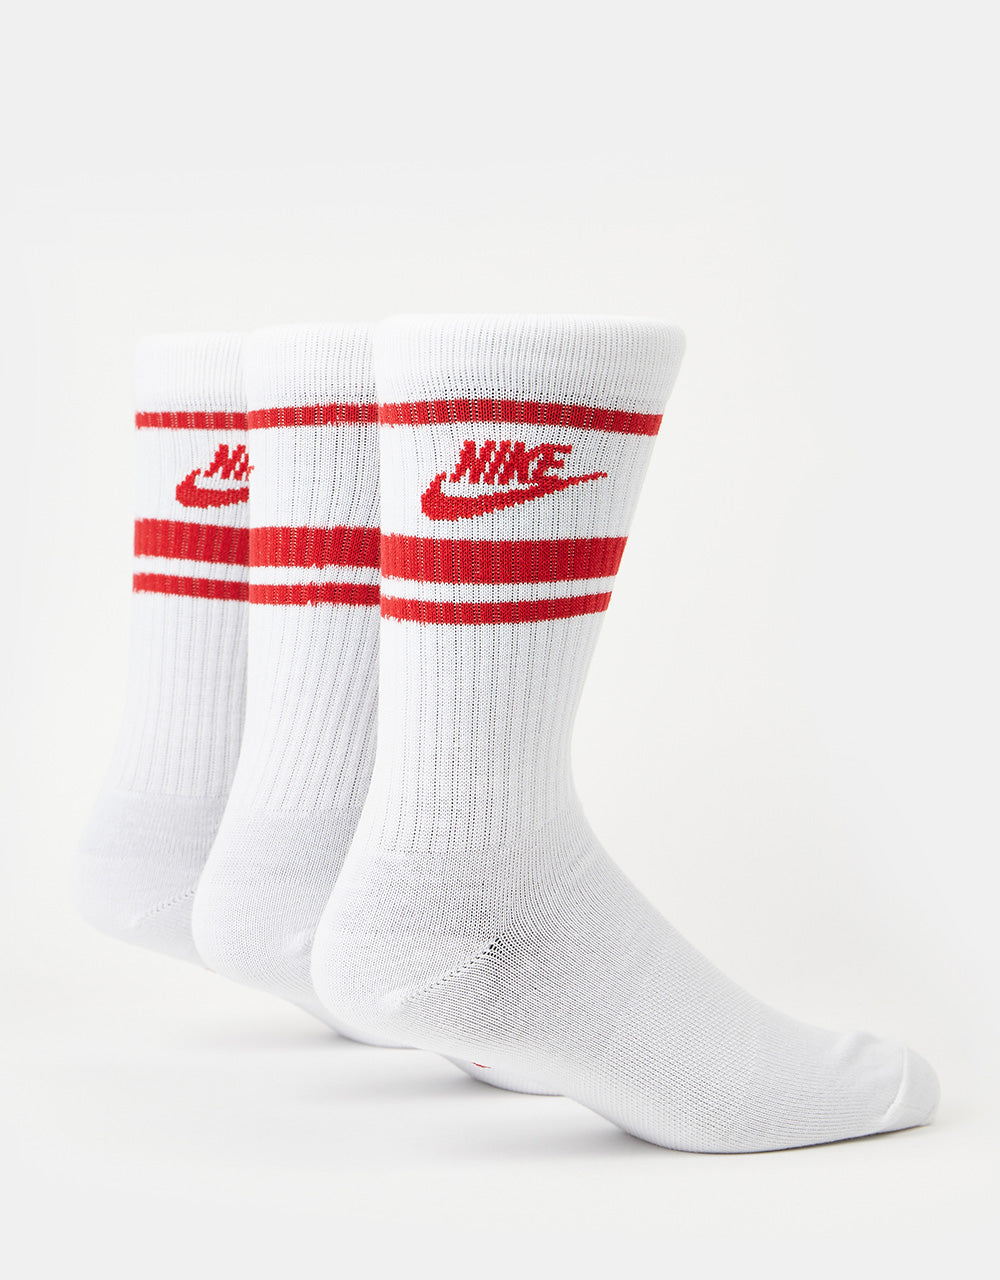 Nike Sportswear Everyday Essential 3 Pack Socks - White/University Red